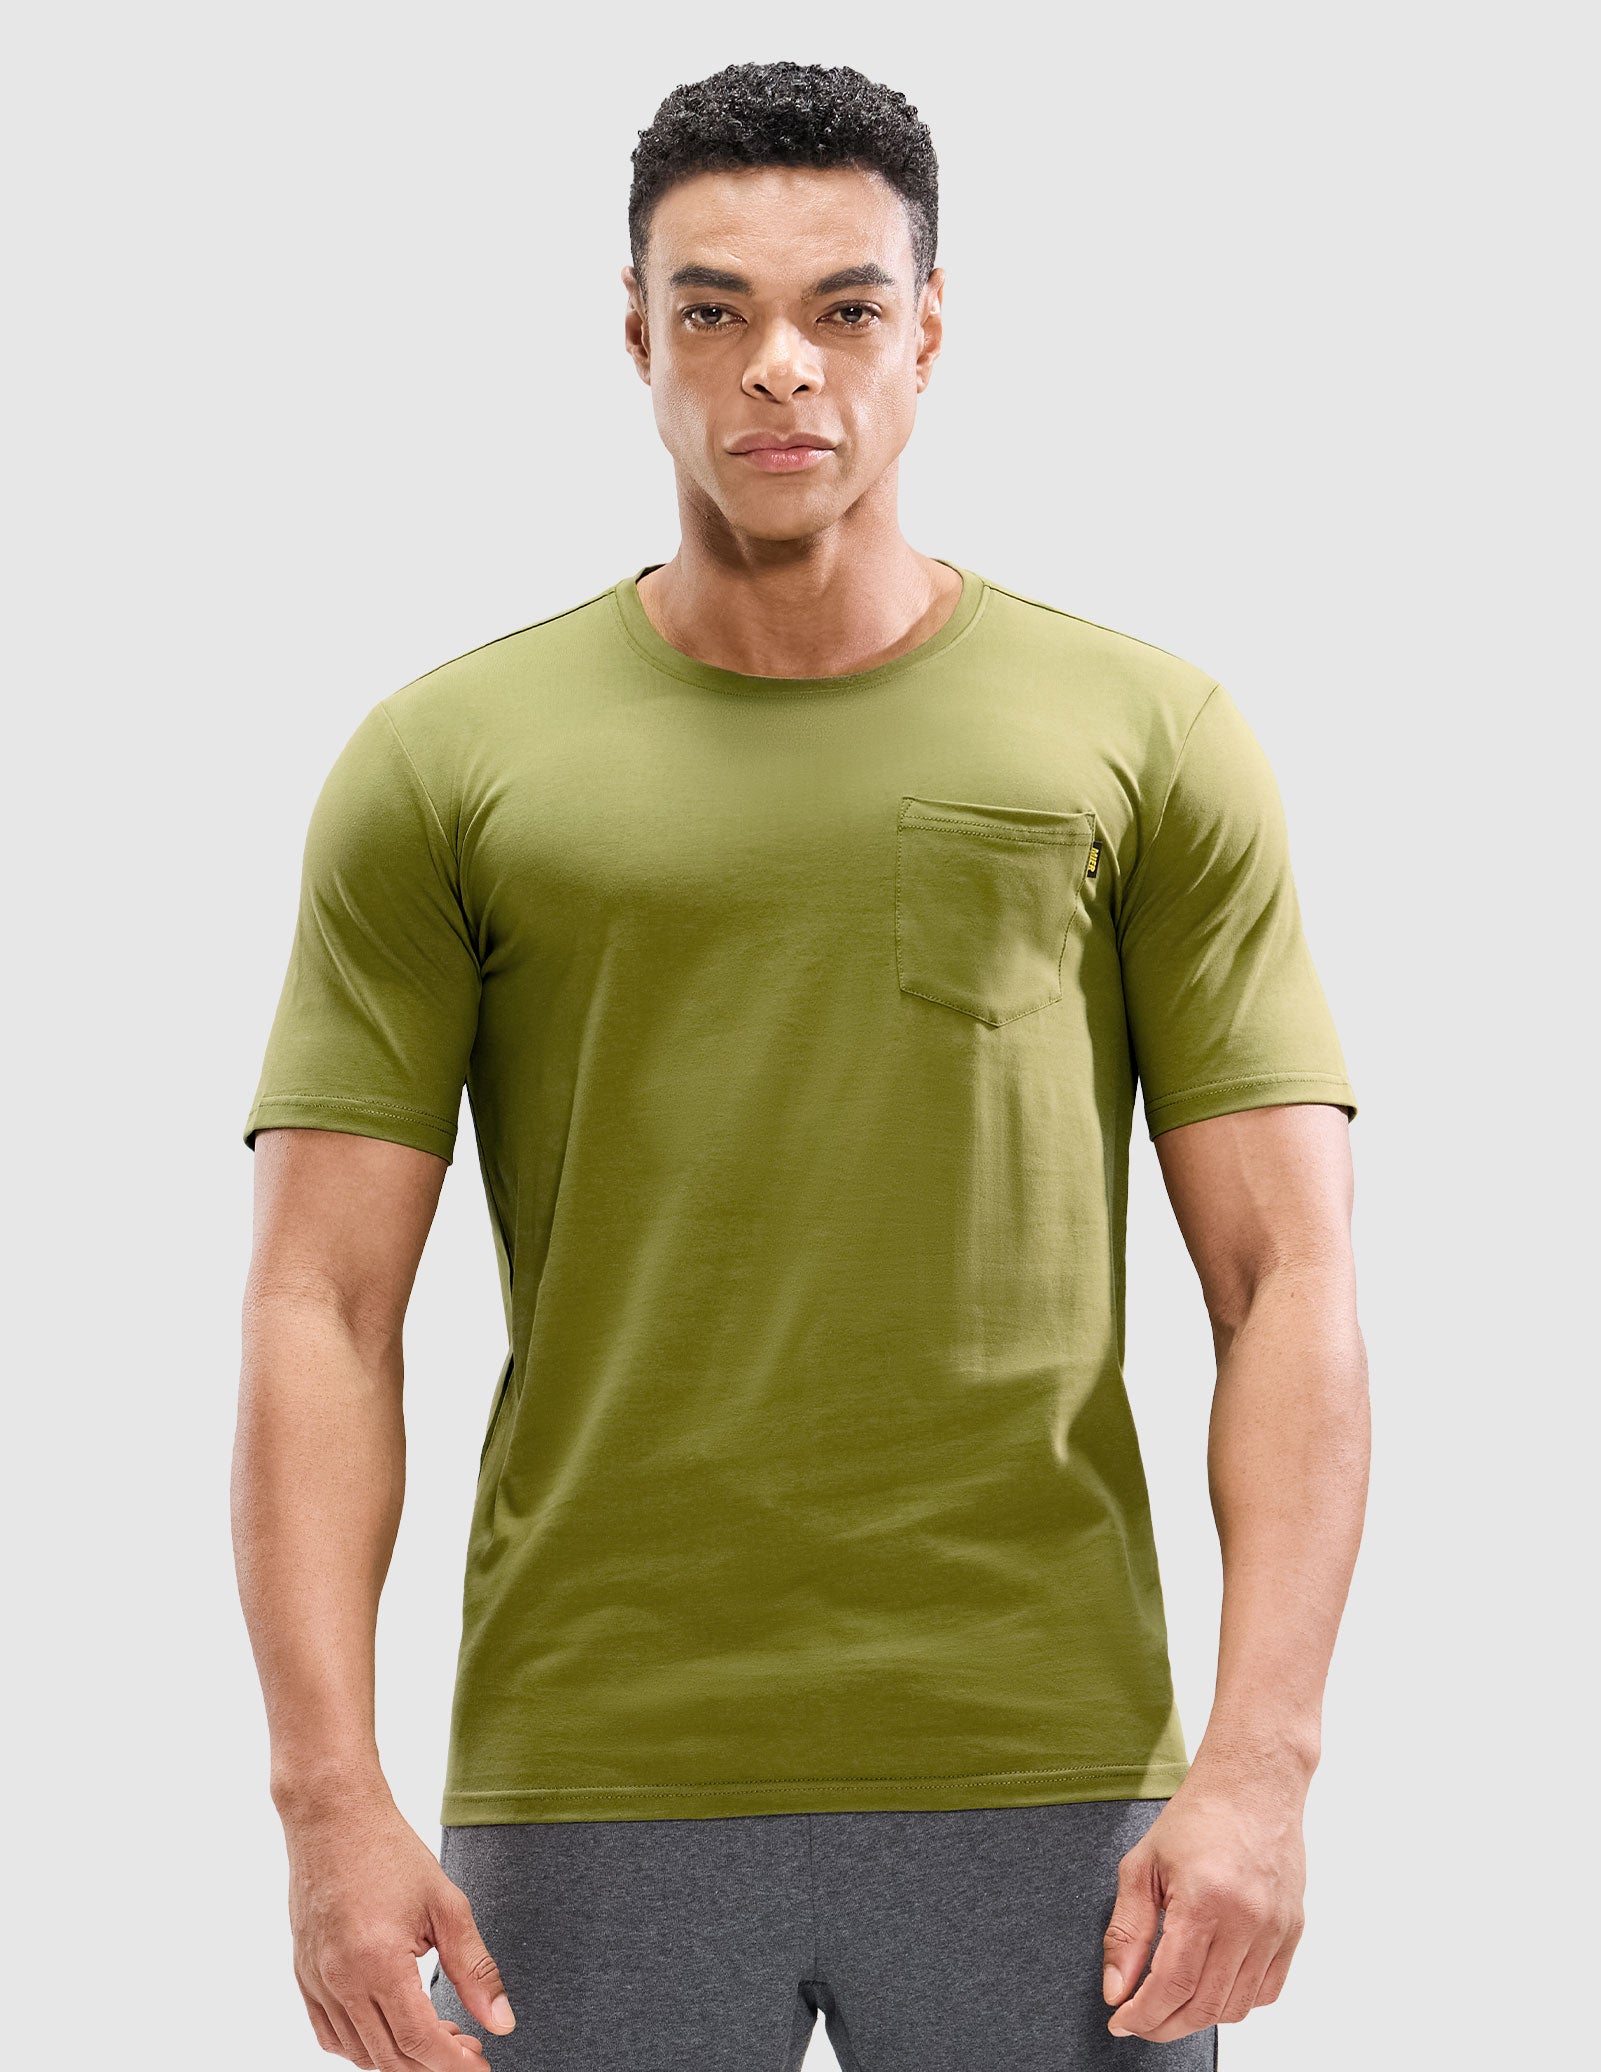 Men's Cotton T-Shirts with Pocket Soft Crewneck Tee